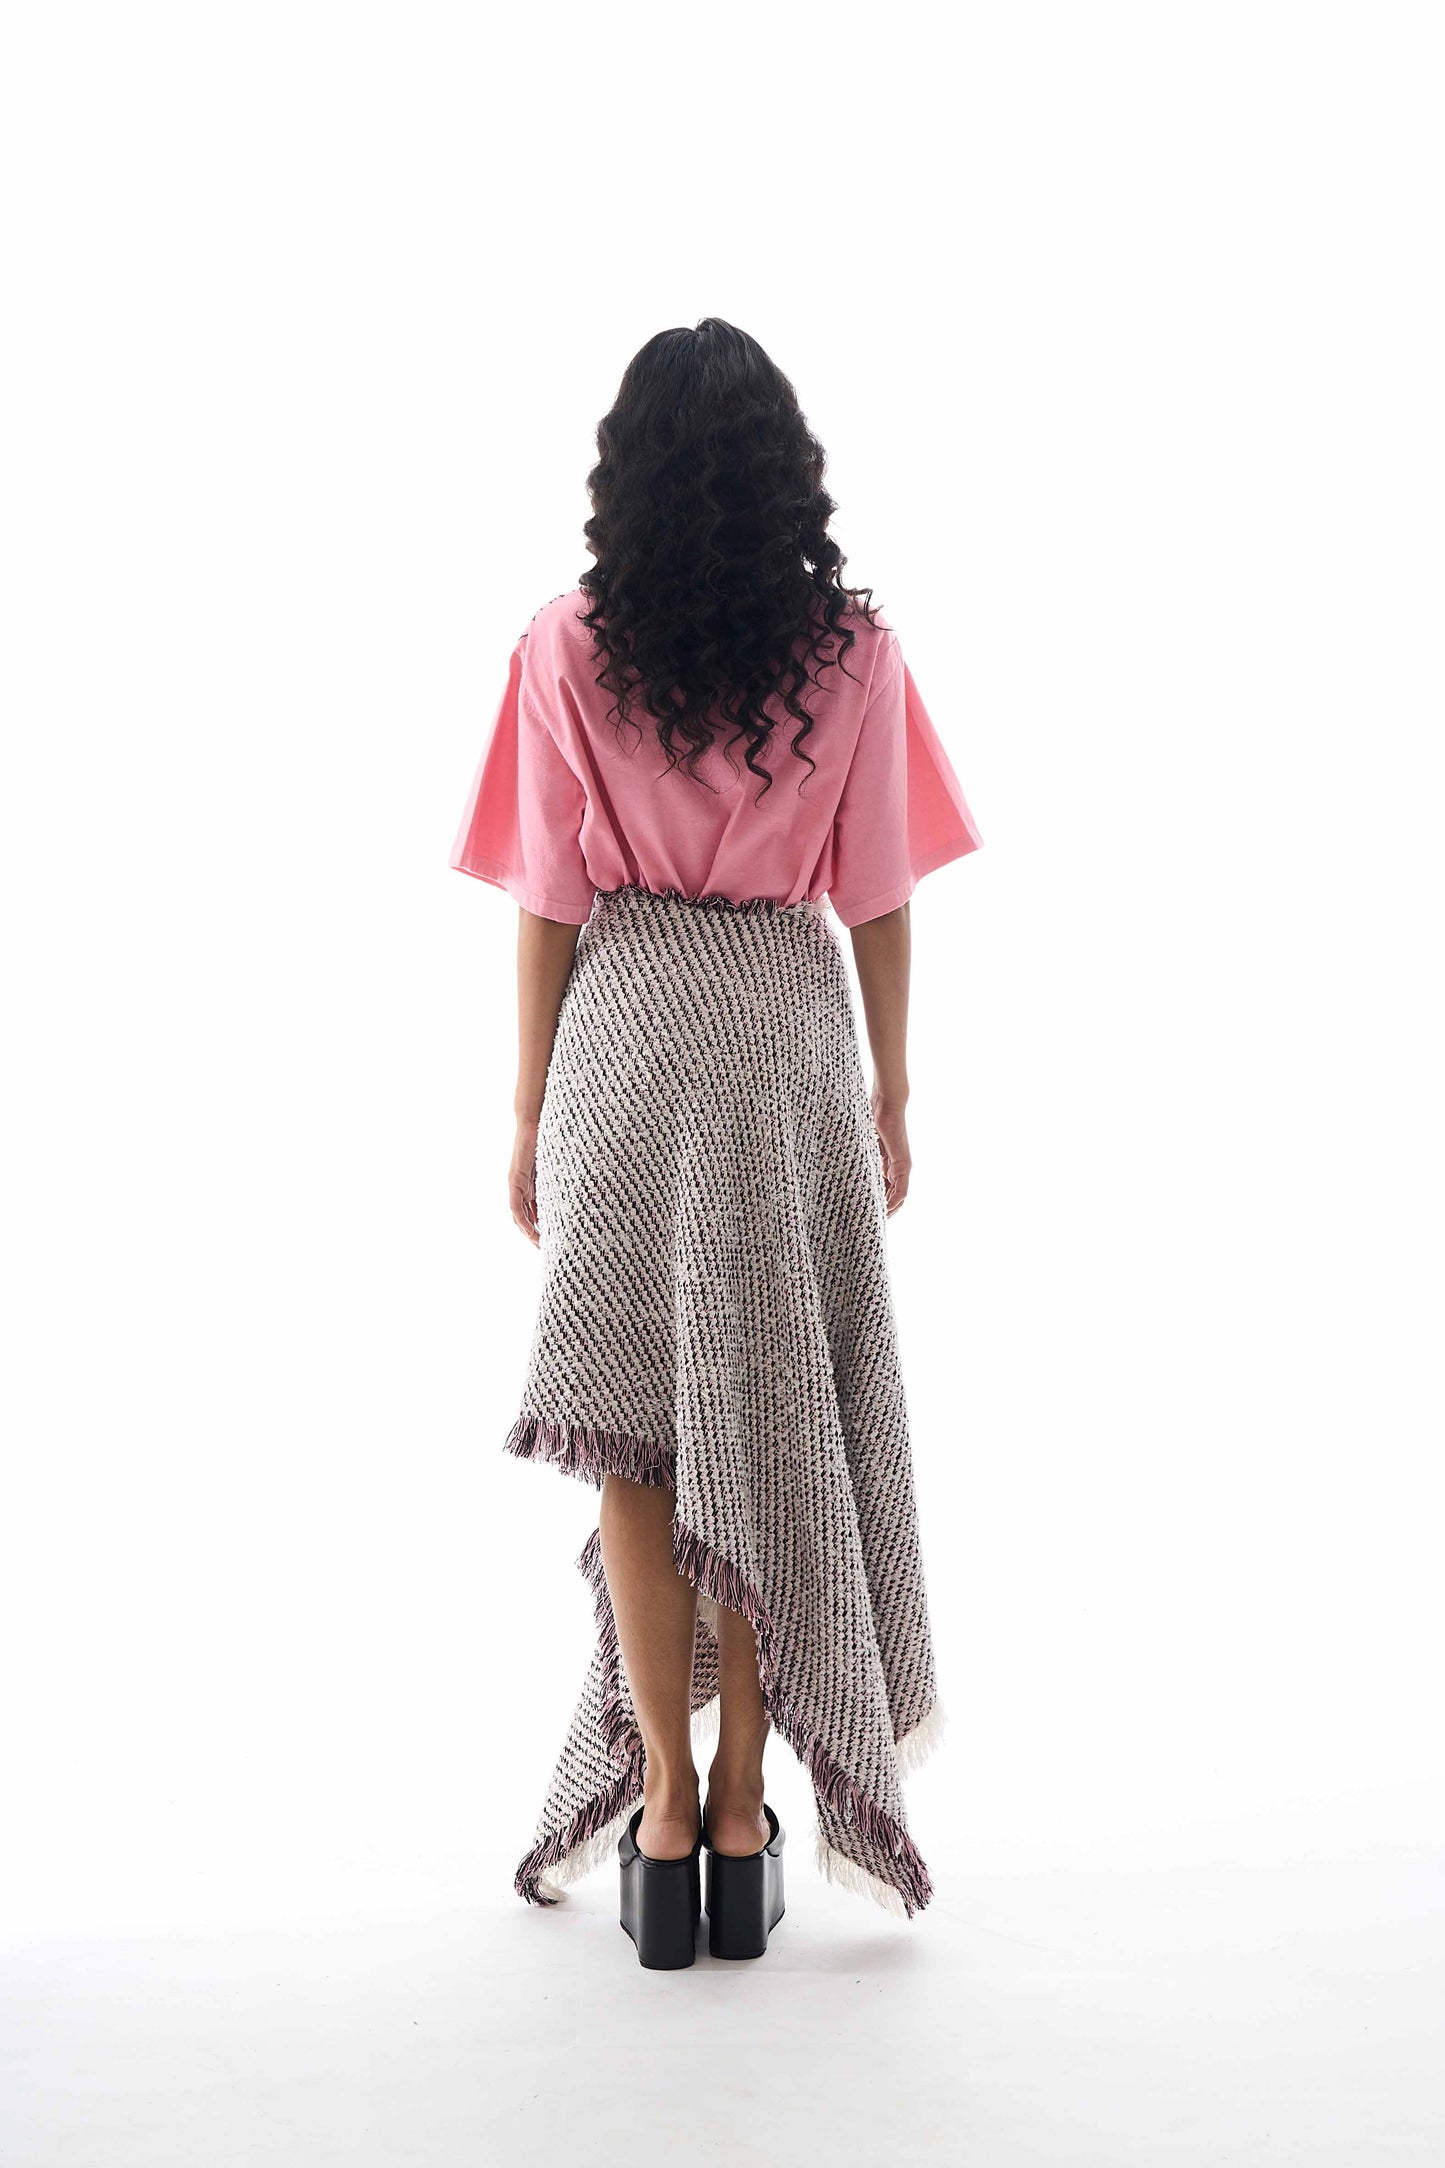 Tamara Tweed Skirt